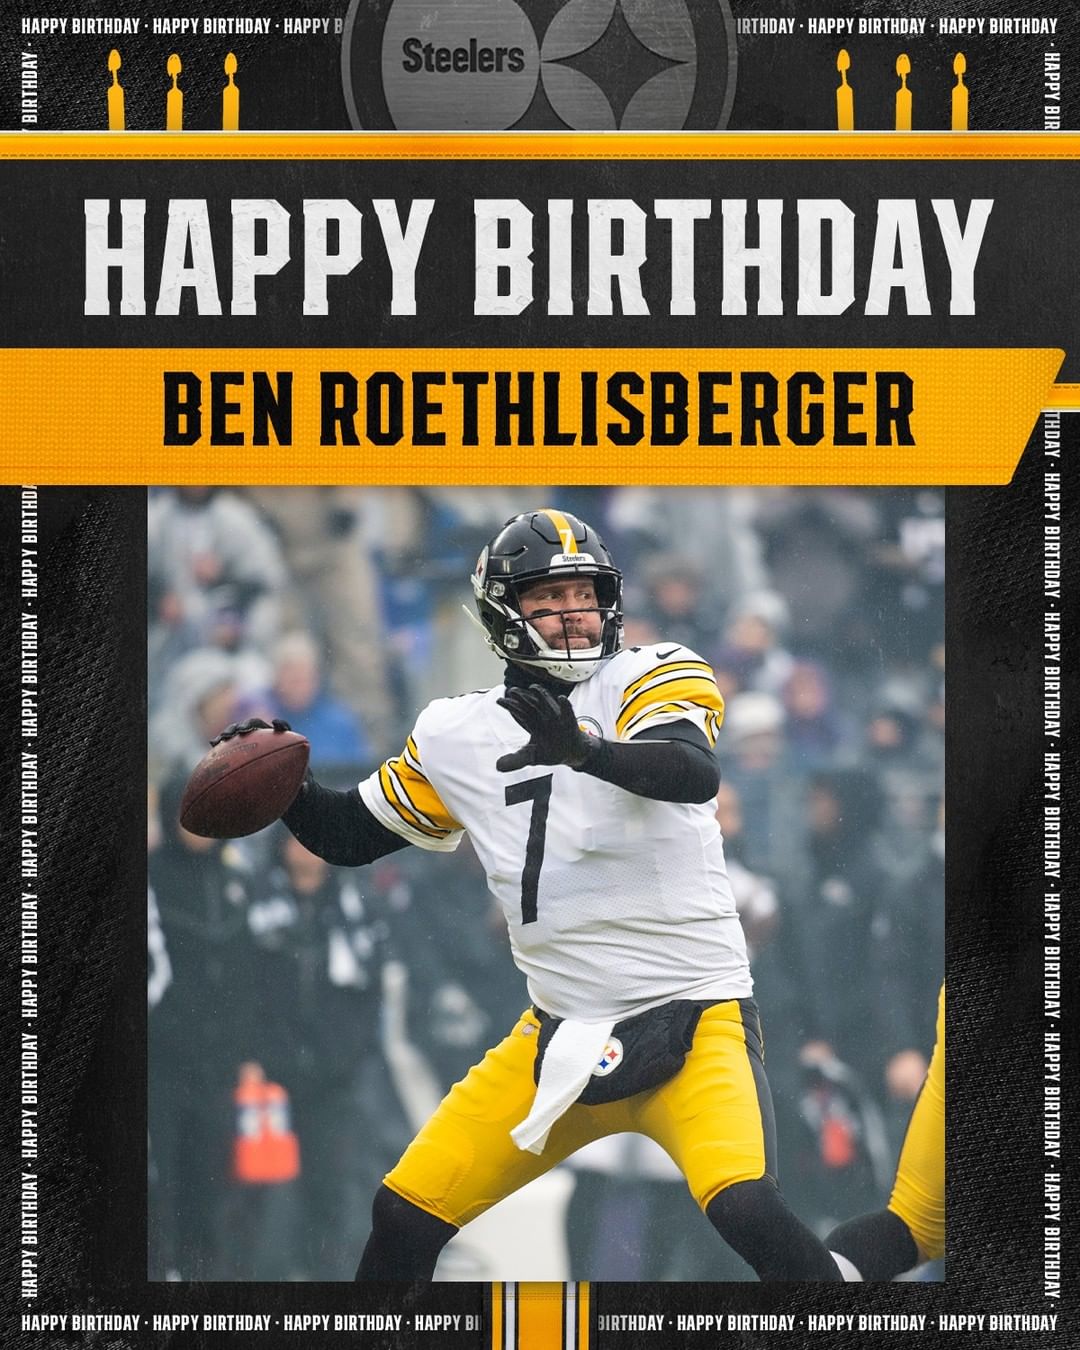 Like to wish Ben Roethlisberger a #HappyBirthday!...